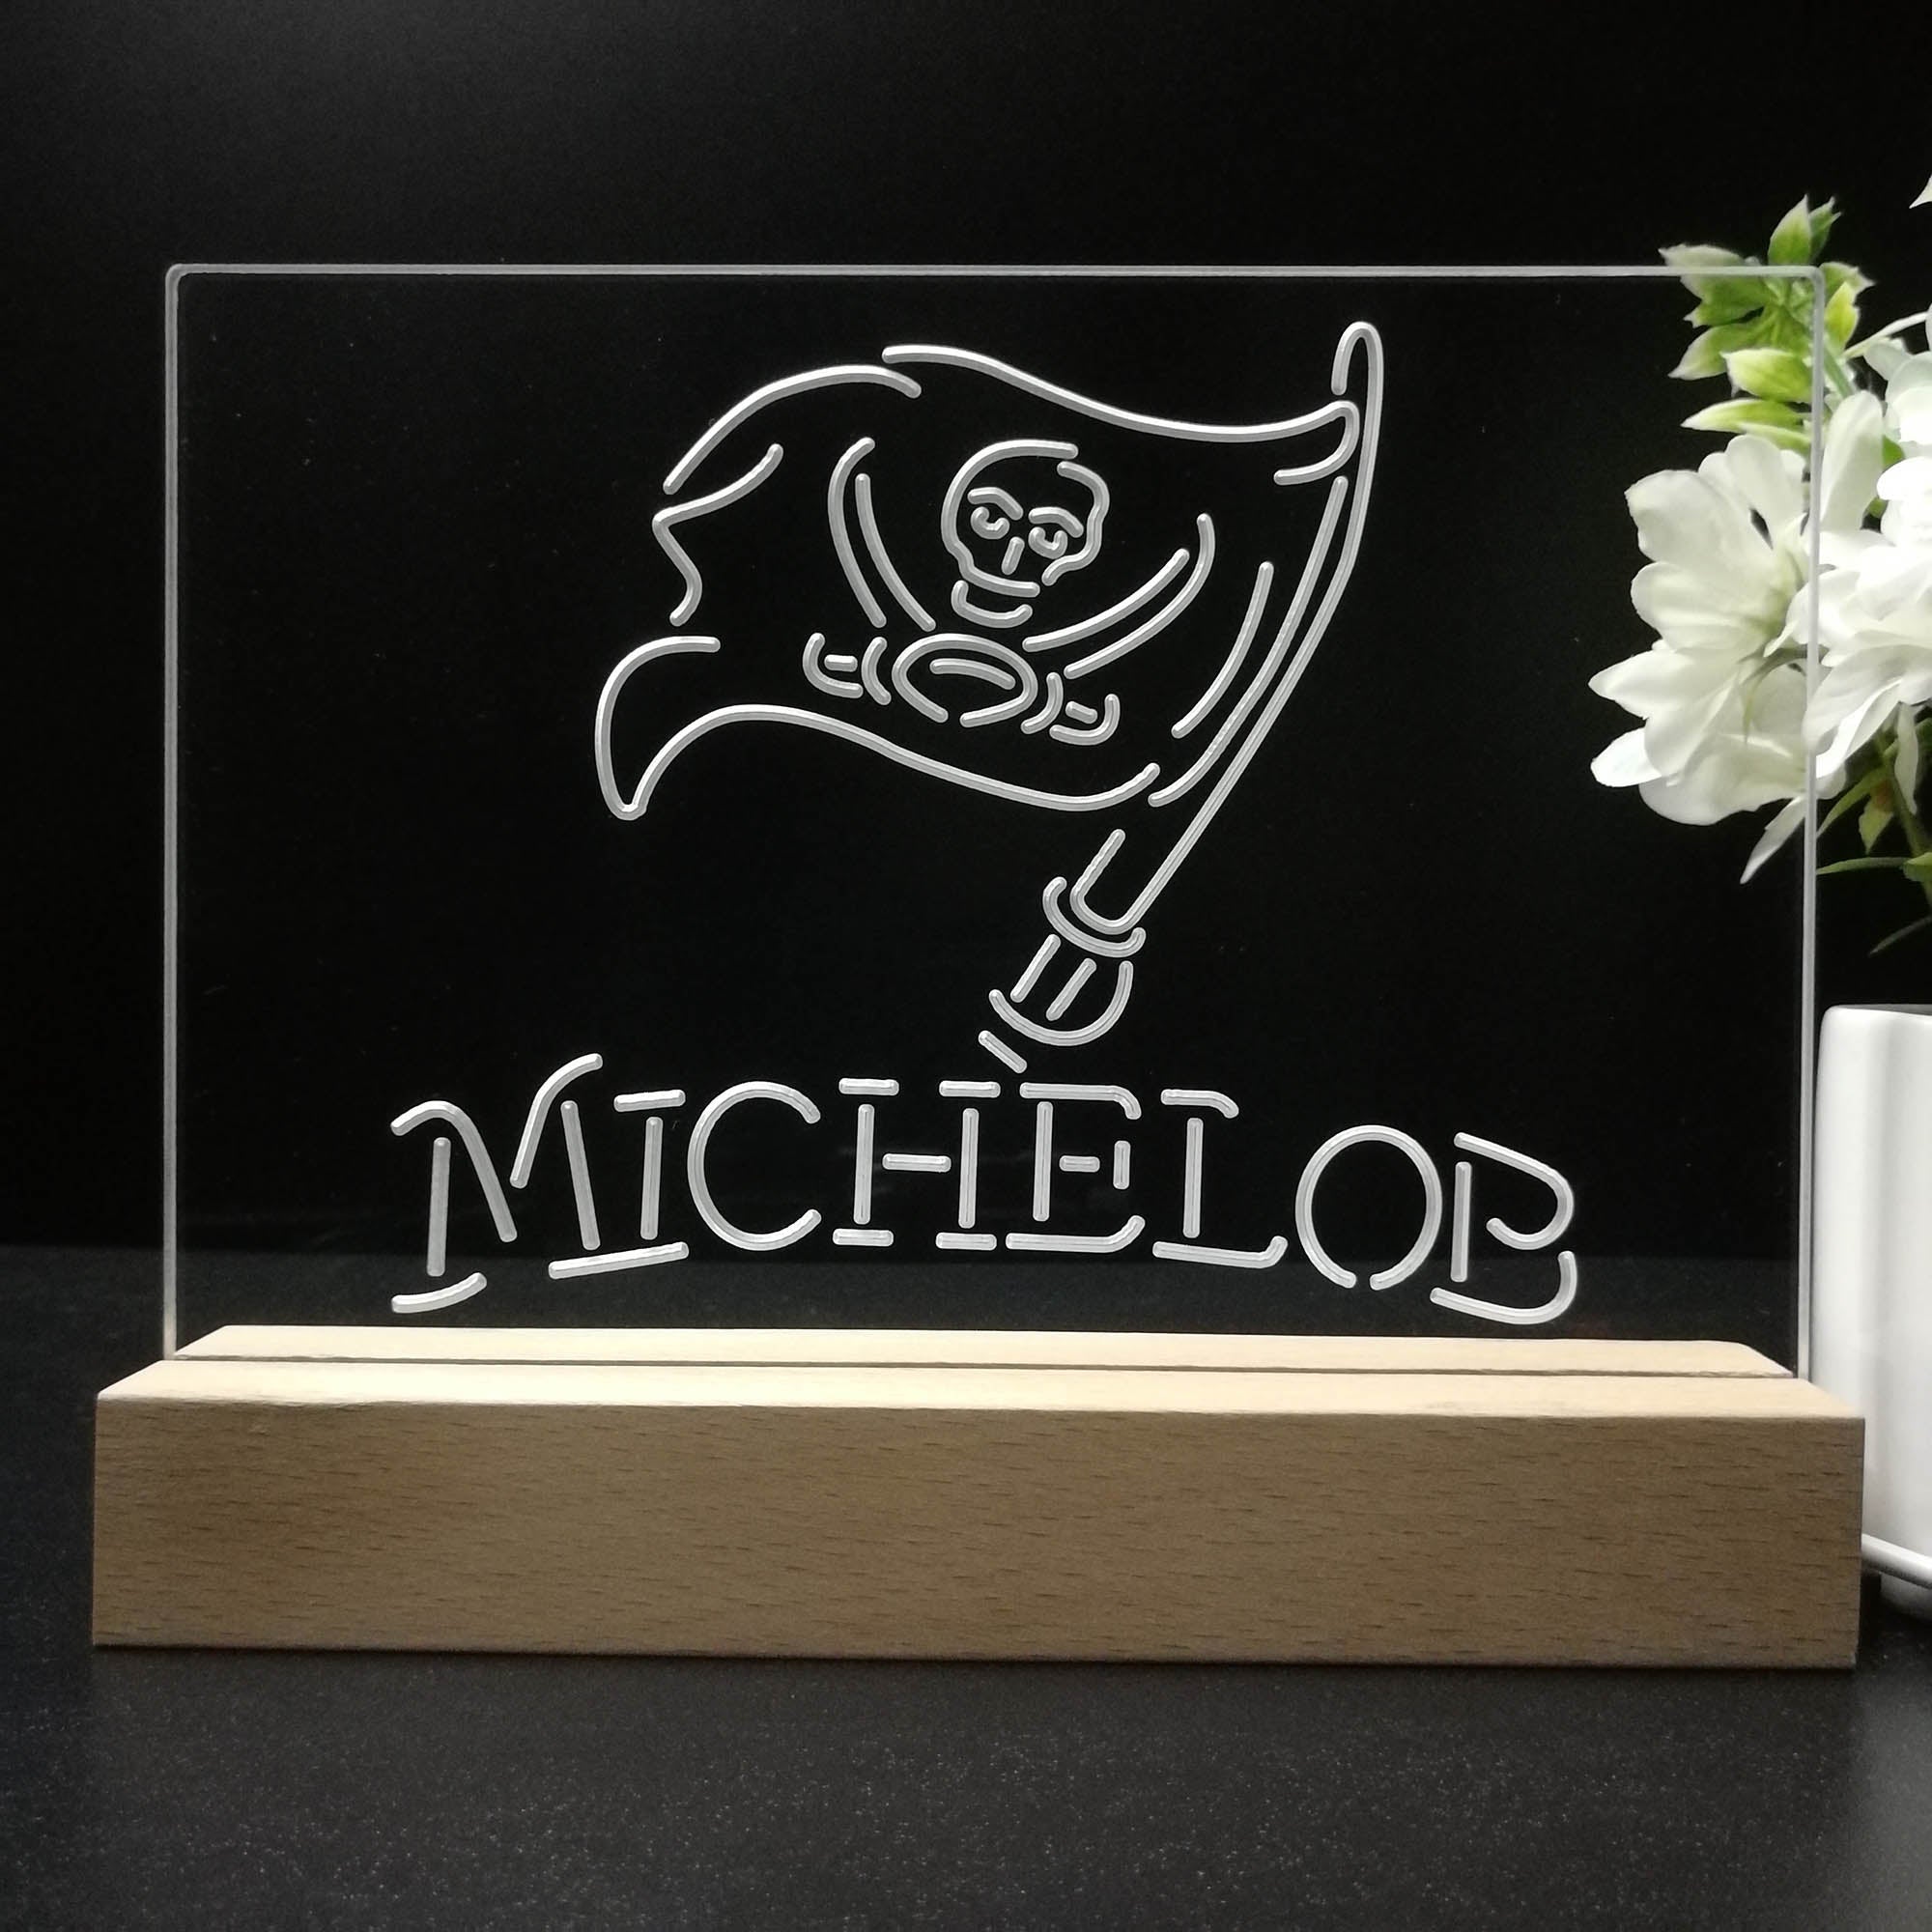 Michelob Bar Tampa Bay Buccaneers 3D Illusion Night Light Desk Lamp